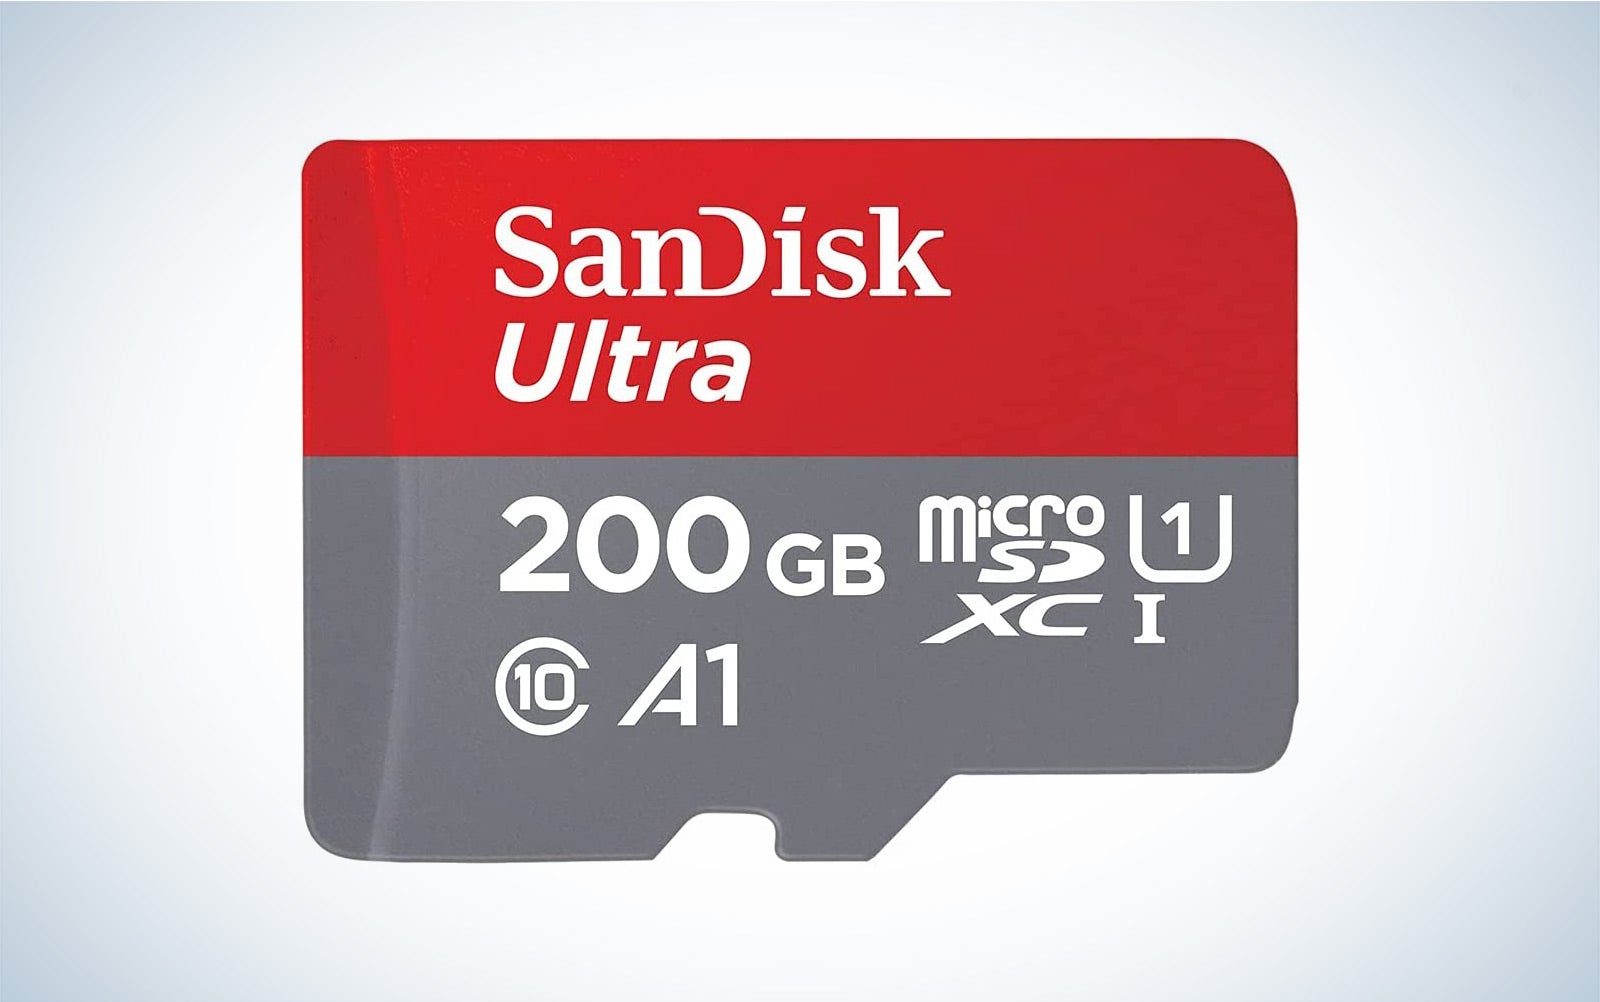 SanDisk 200GB Ultra microSDXC是最好的SDXC卡。